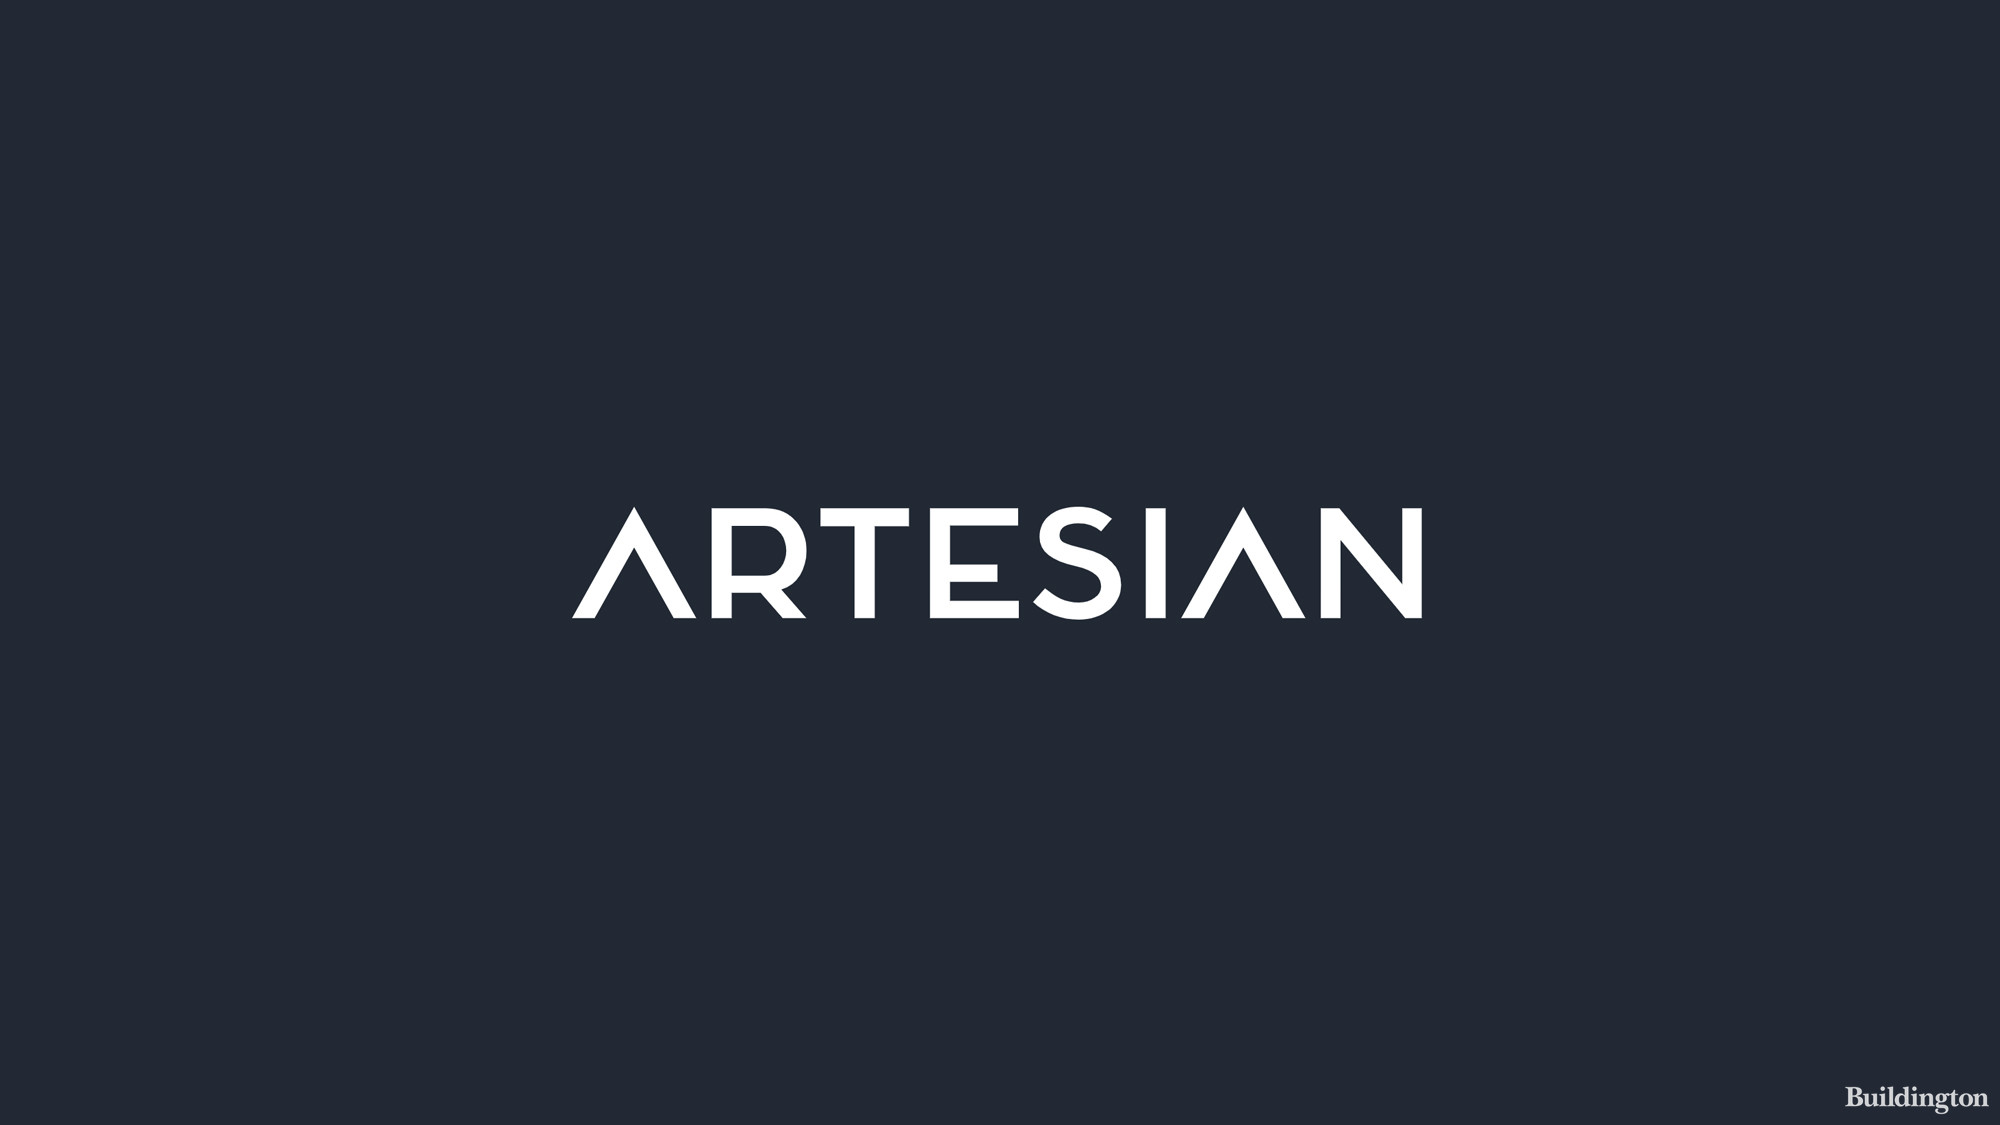 Artesian office development logo